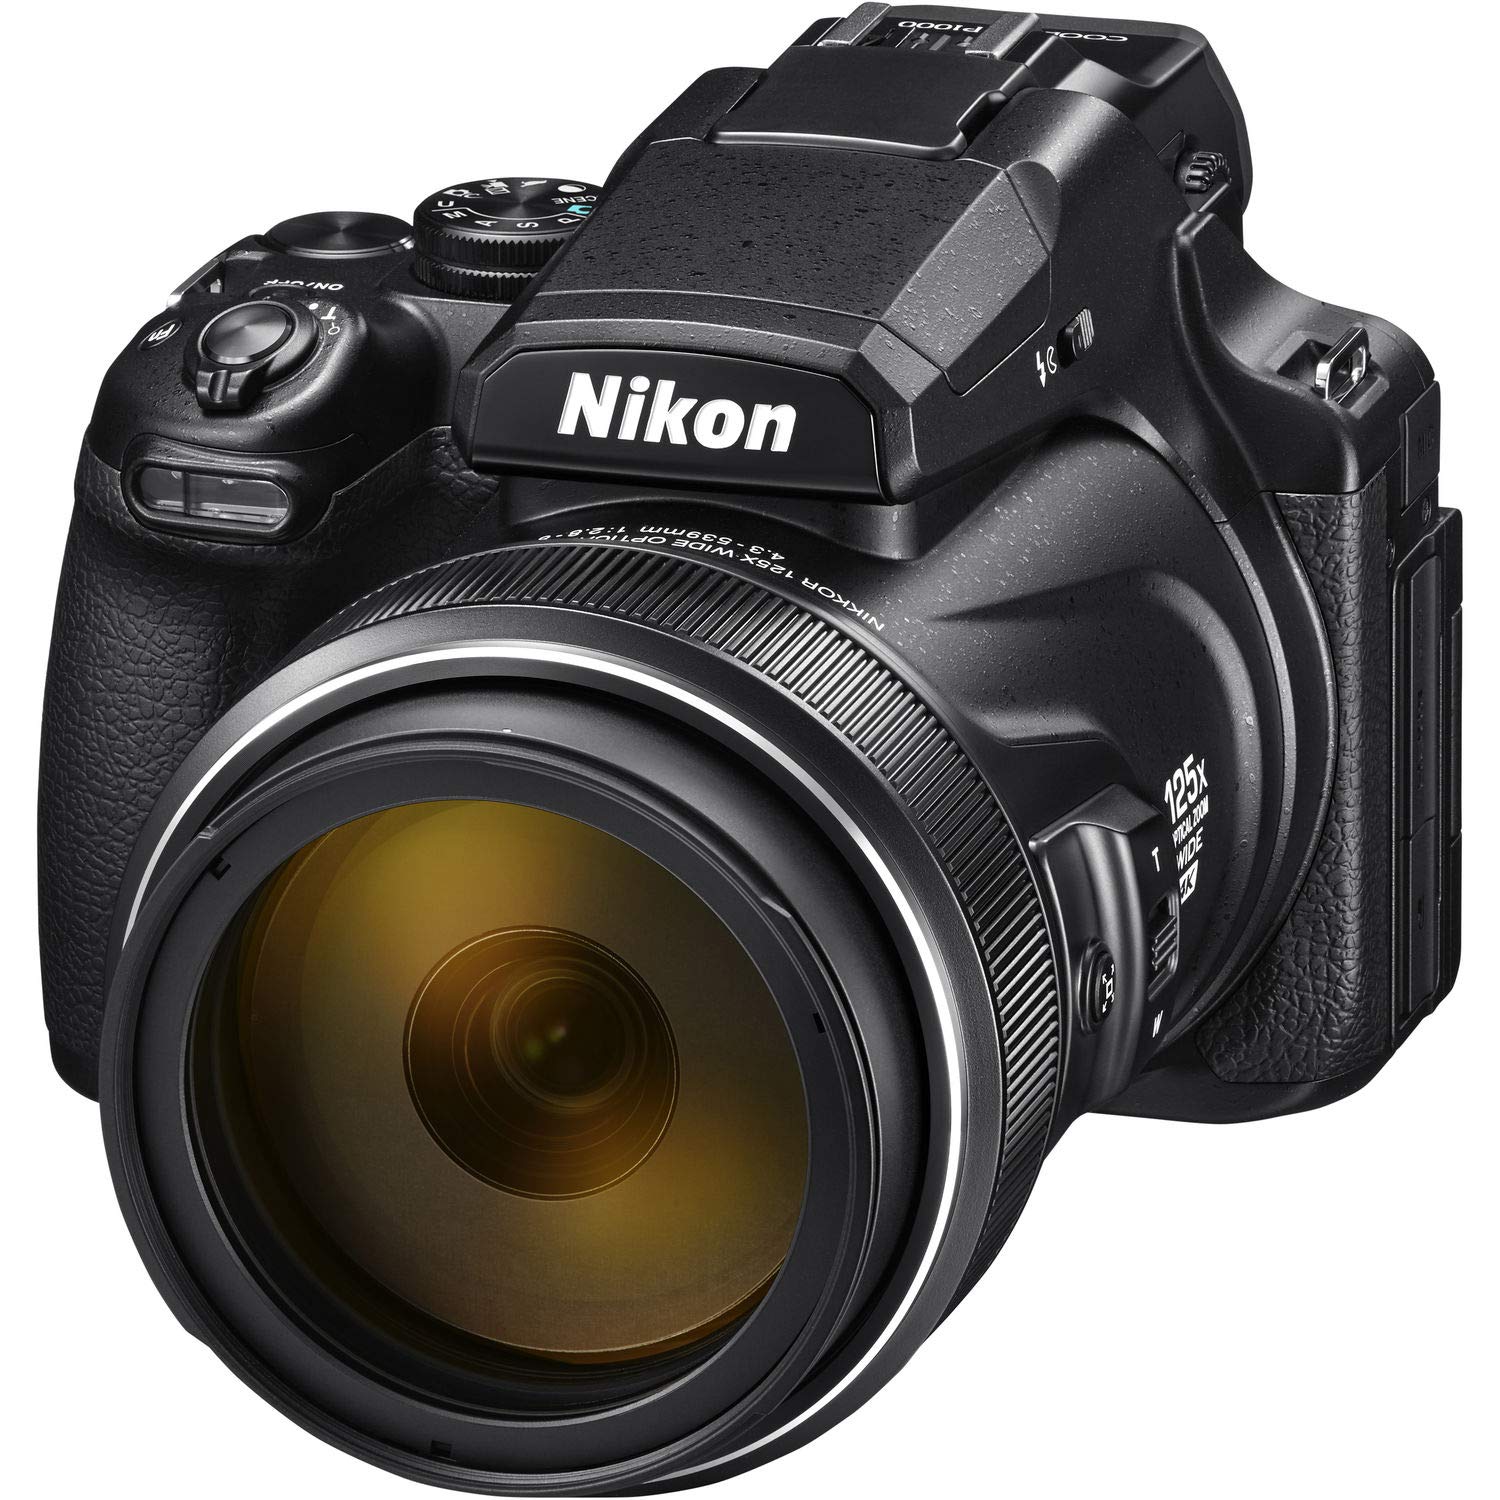 Nikon COOLPIX P1000 Digital Camera + 64GB Sandisk Extreme Memory Card Base Bundle International Model